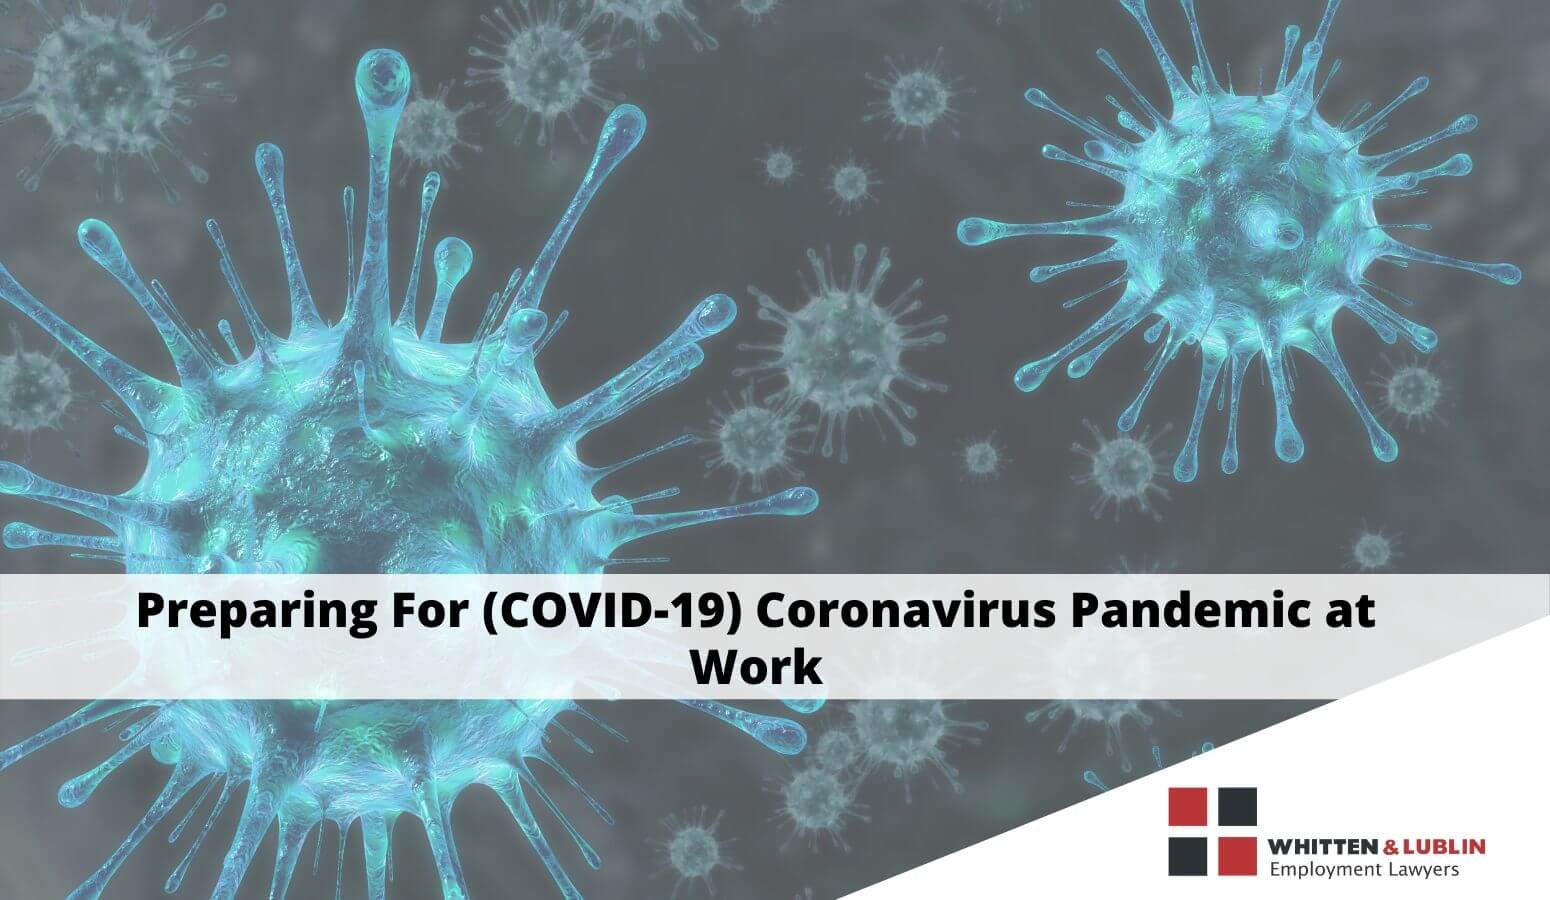 Featured image for “Preparing For (COVID-19) Coronavirus Pandemic at Work”